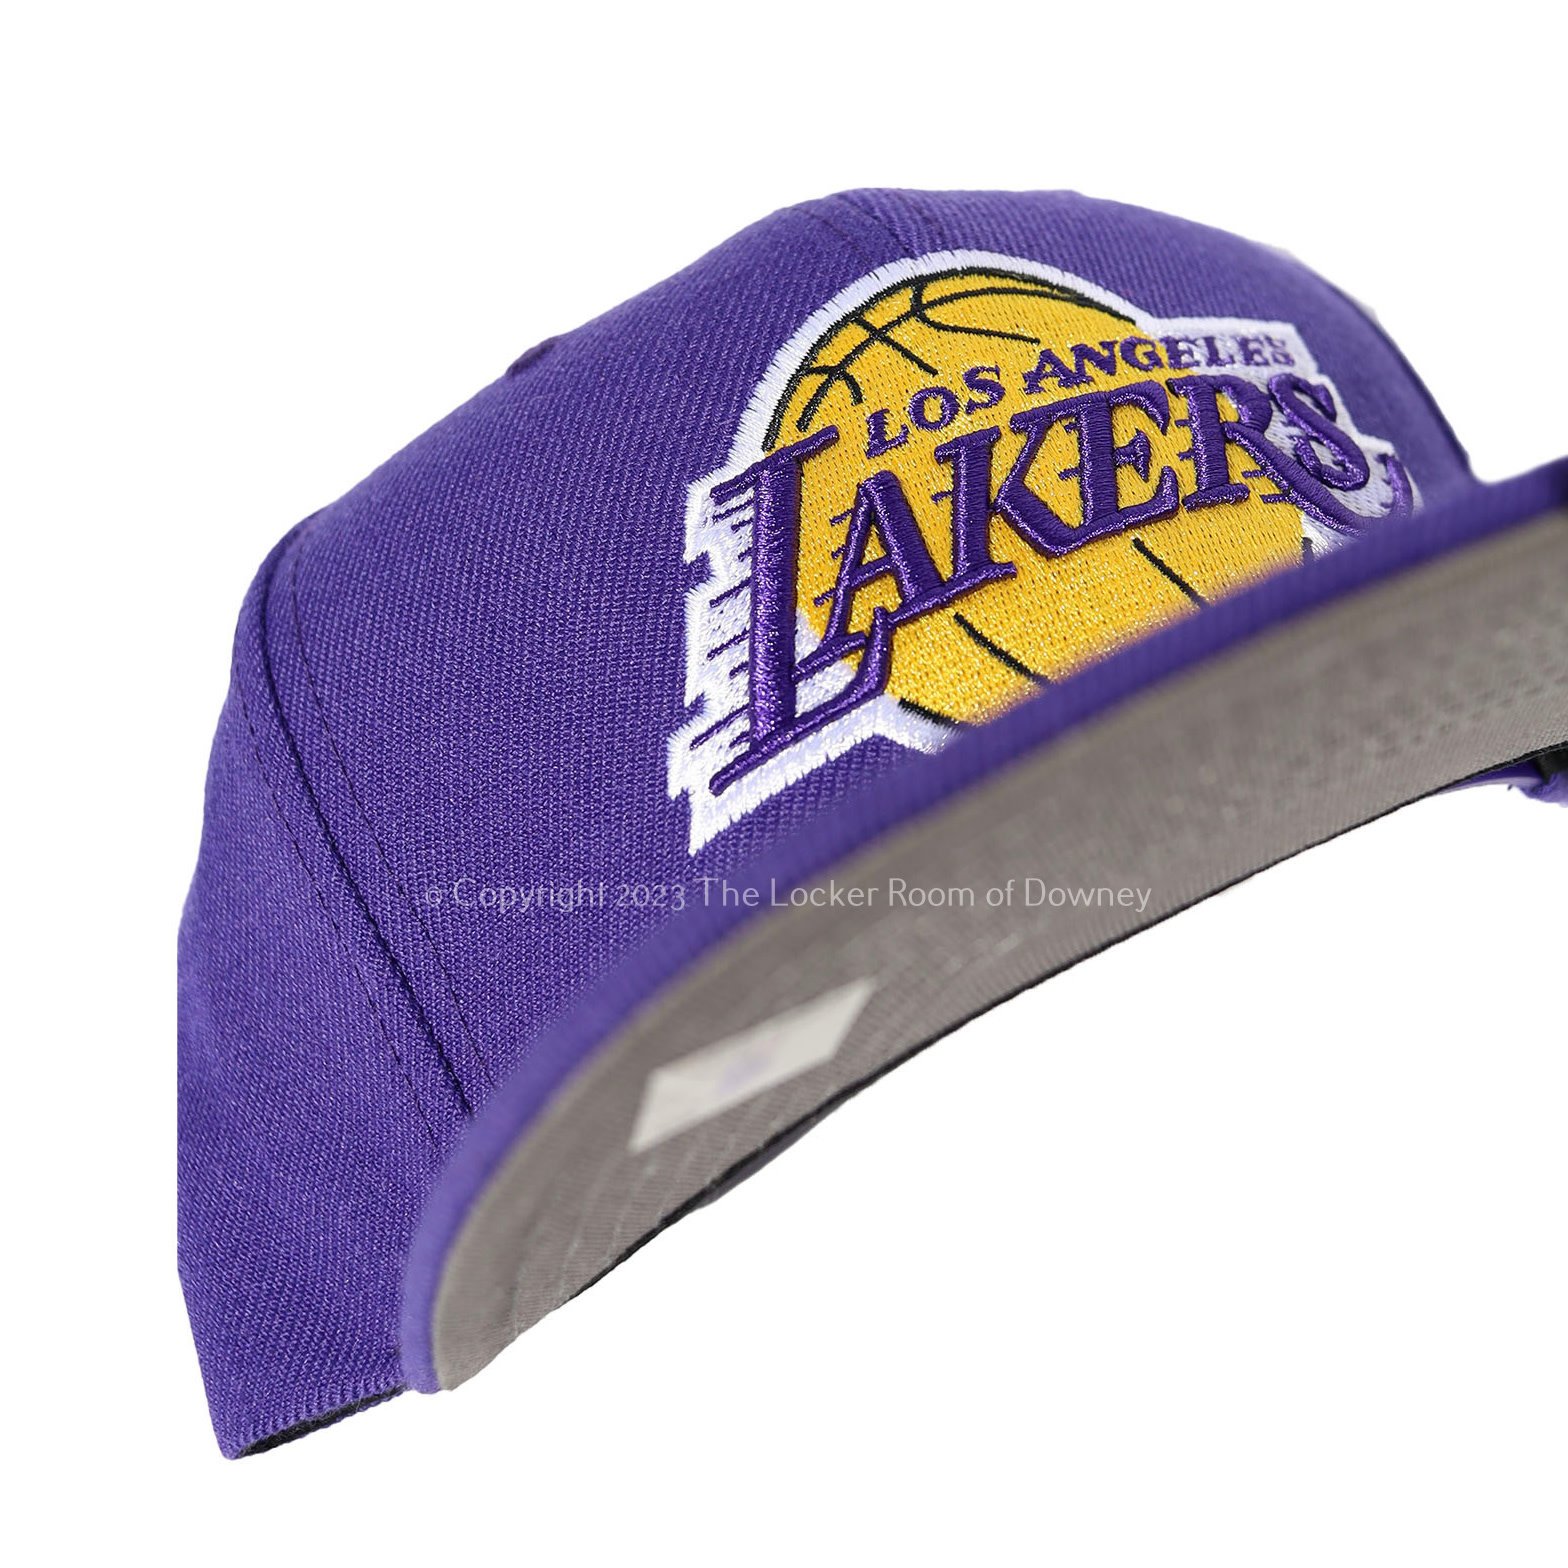 New Era Team Graphic Trucker Lakers Cap (purple)